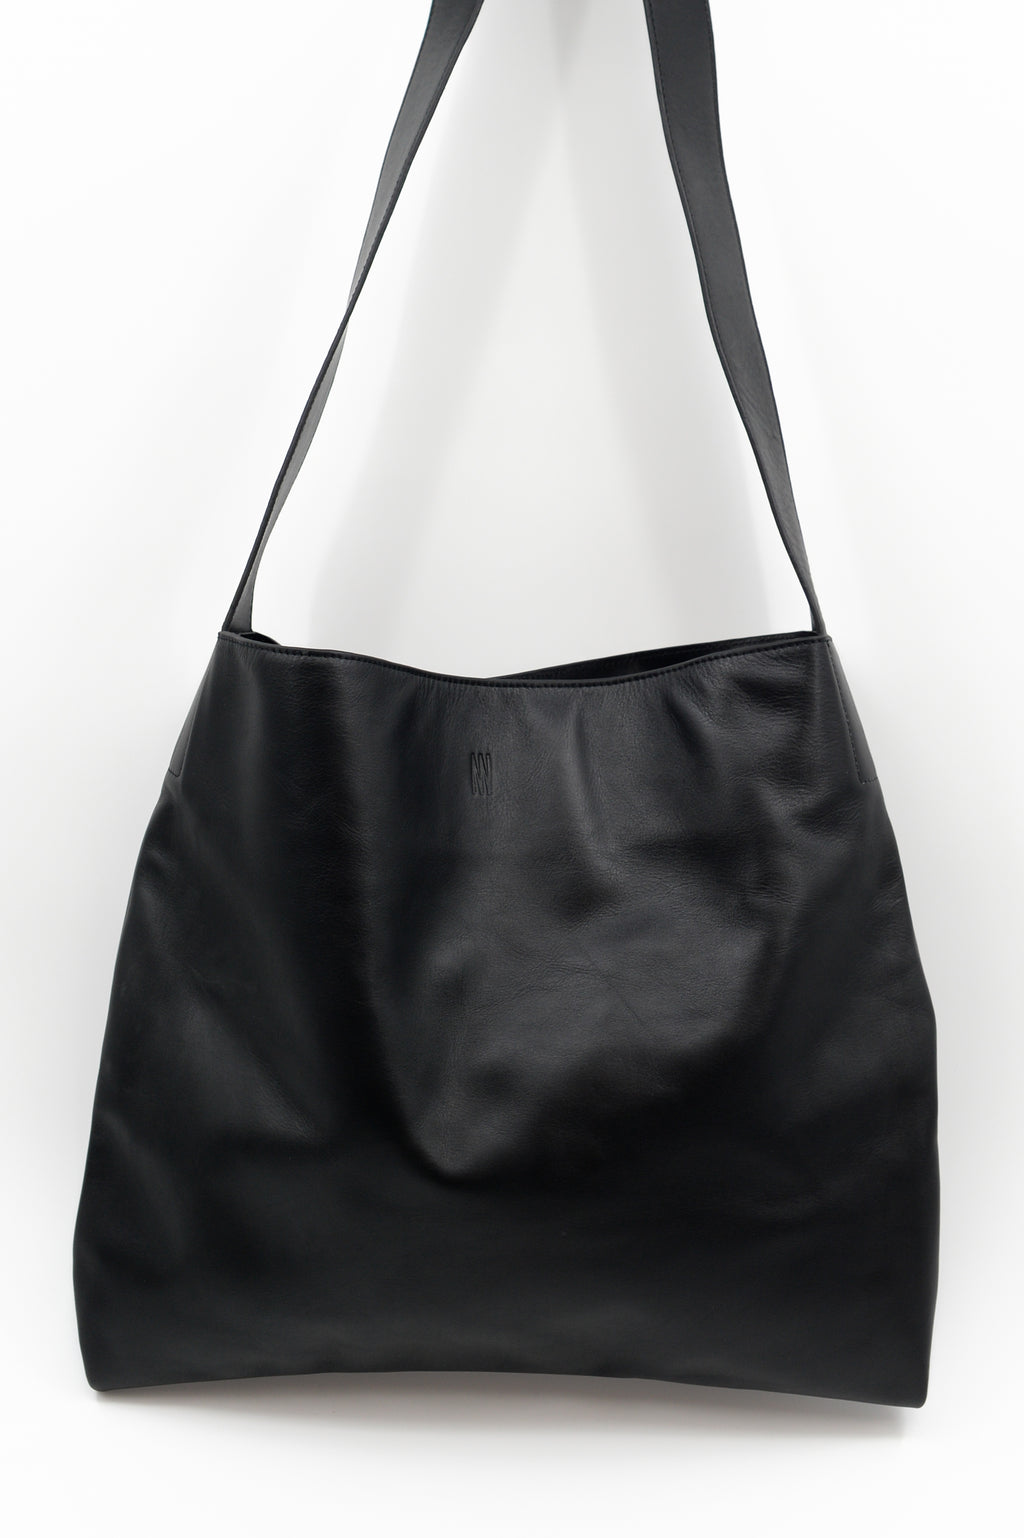 Big crossbody handbag in black nappa leather